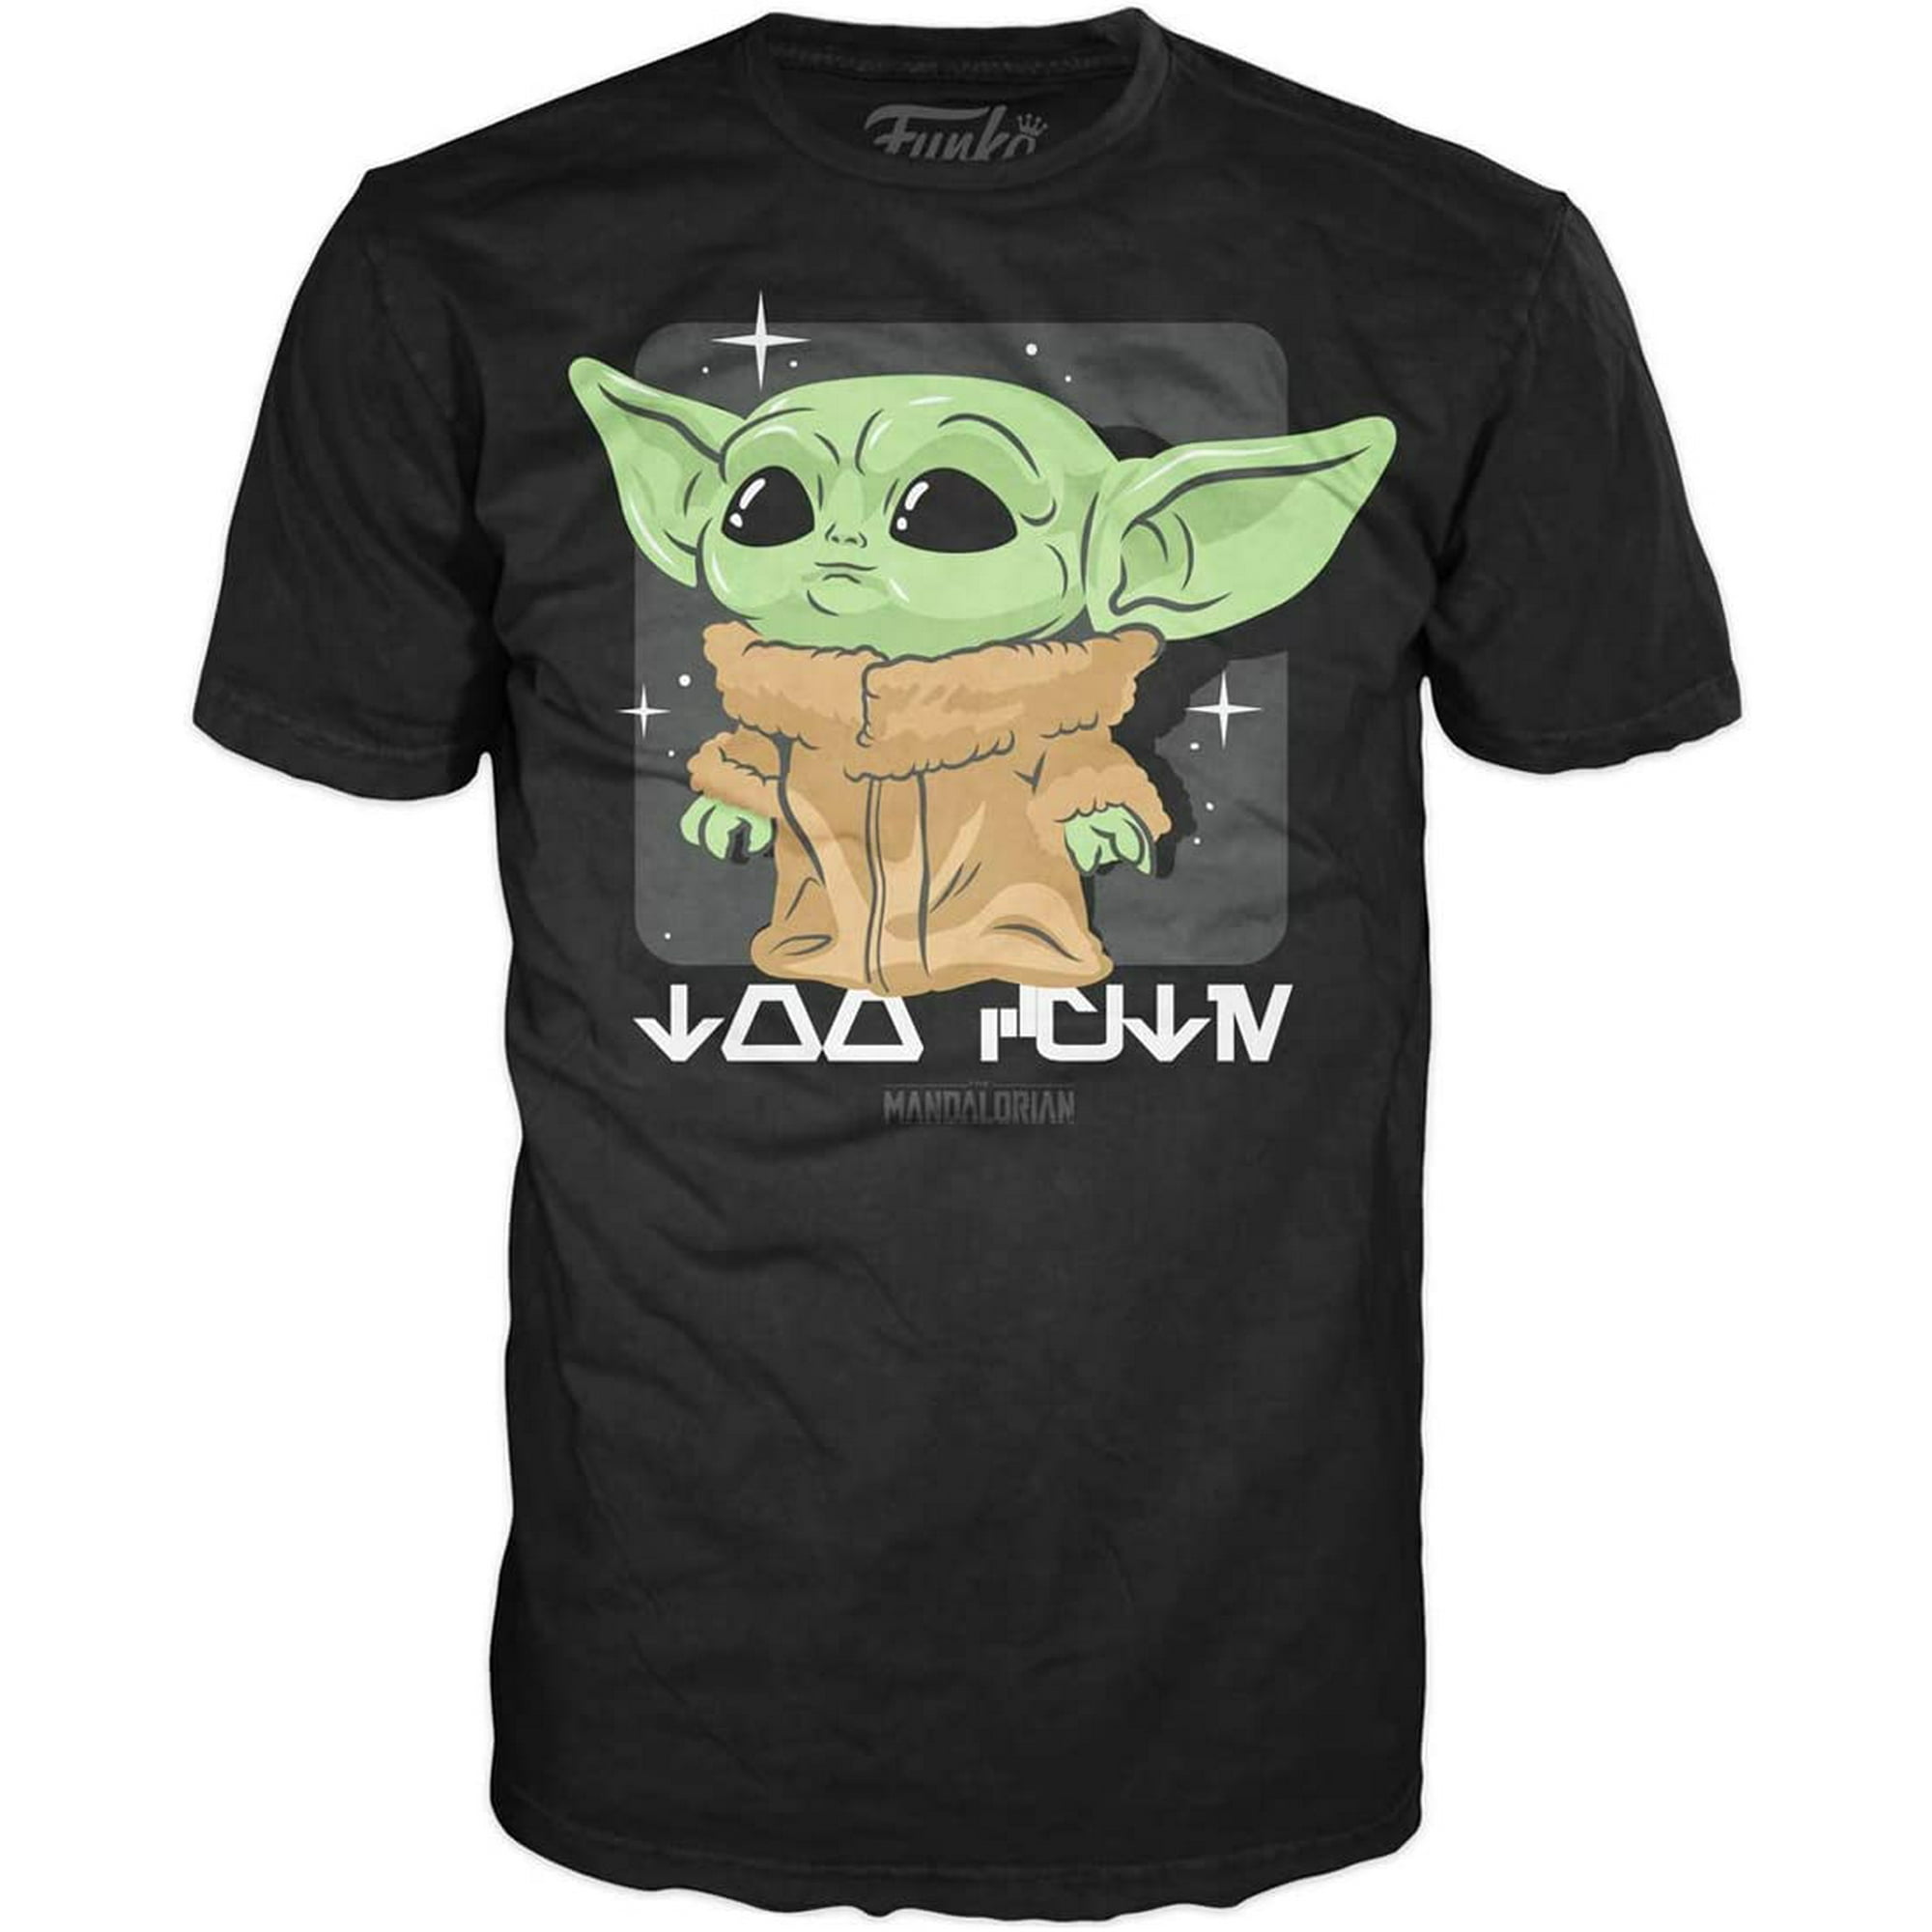 Star Wars T Shirt Kinder The Mandalorian Baby Yoda Tshirt f/ür Jungen M/ädchen